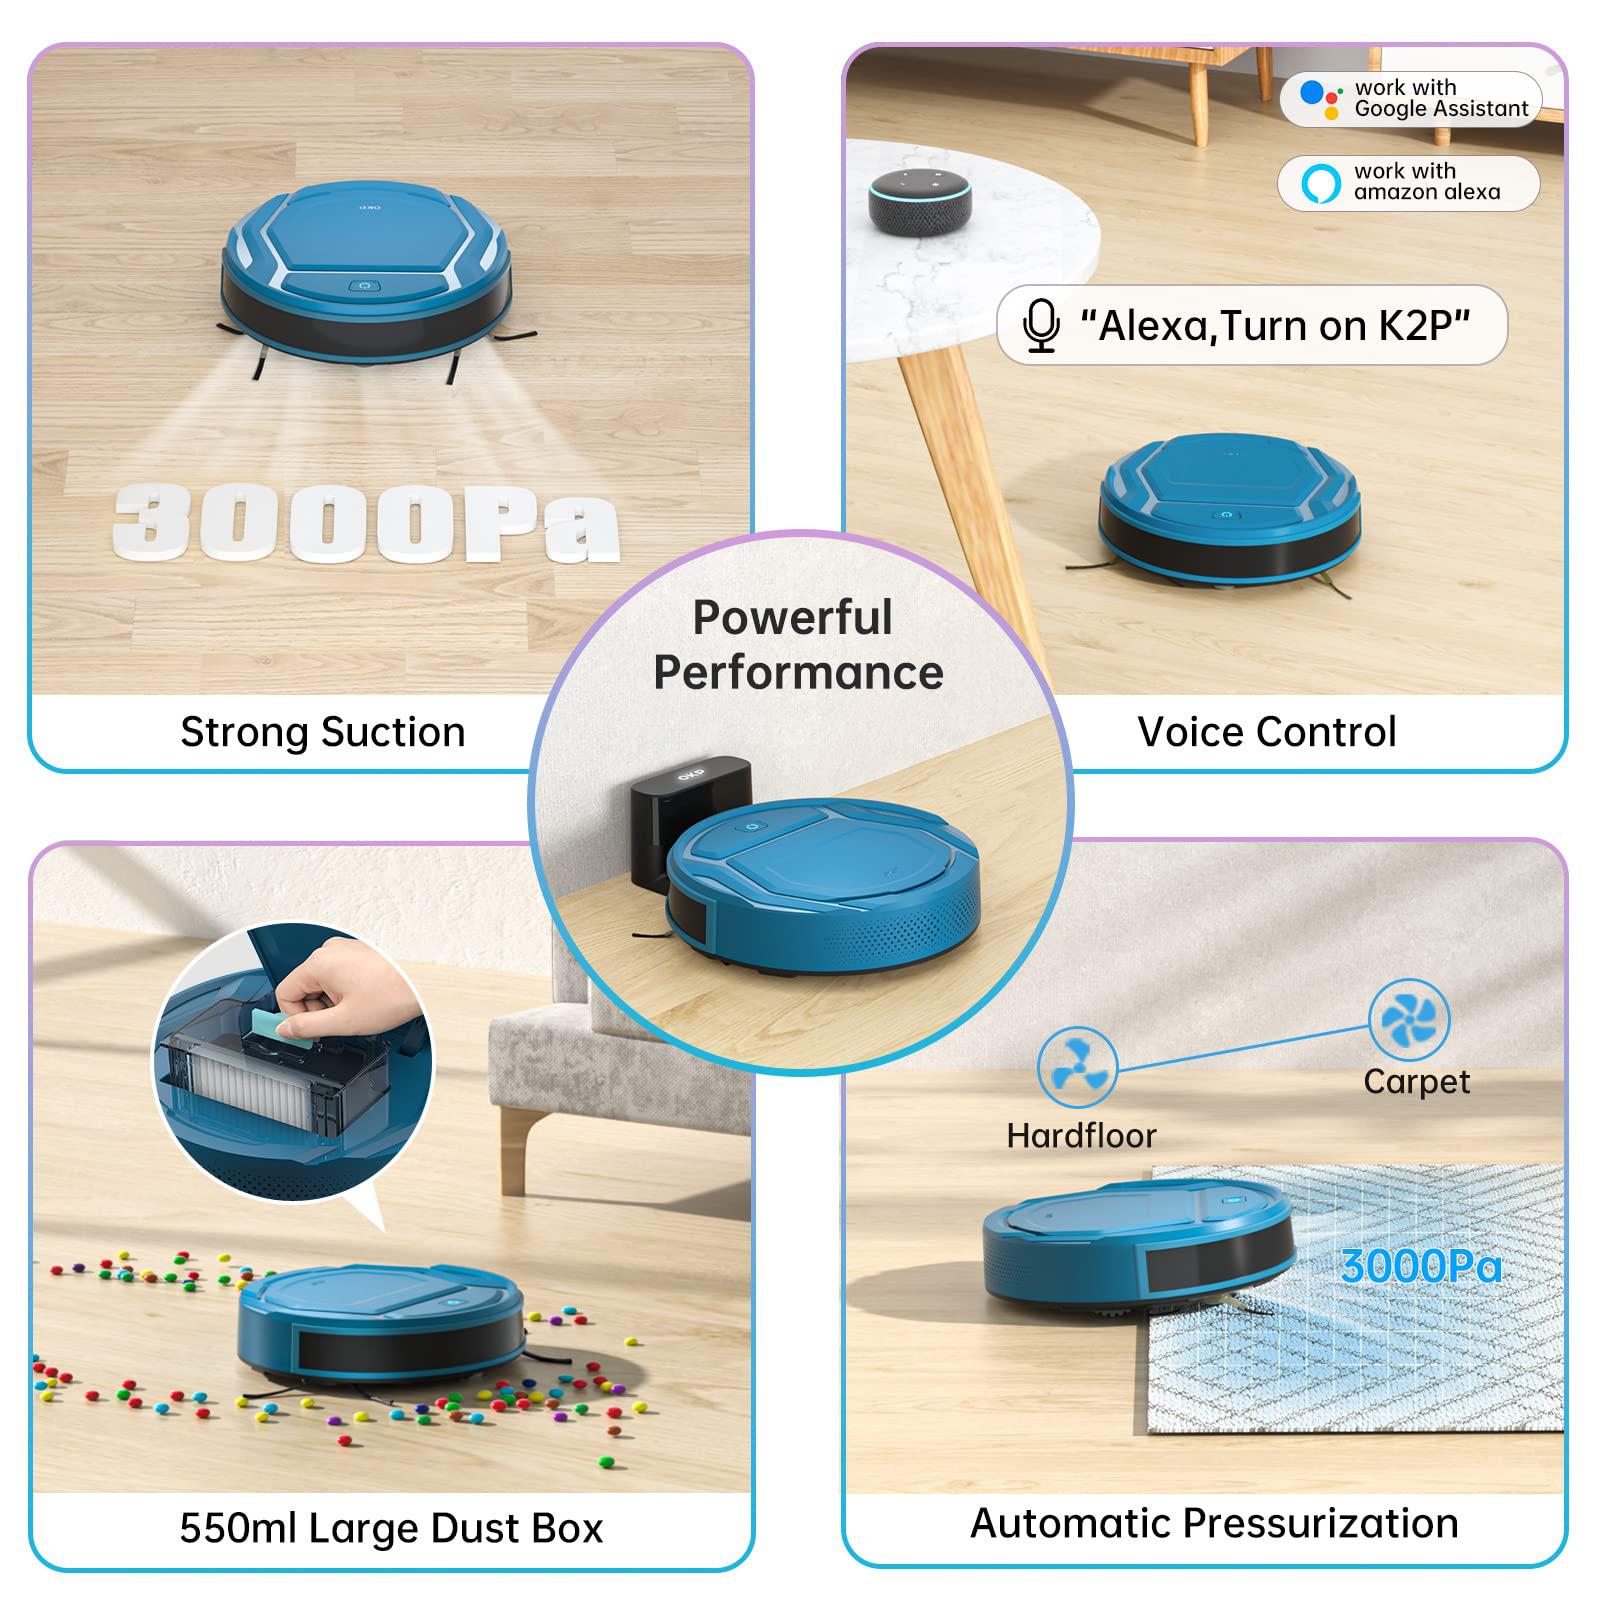 okp life k2p robot vacuum cleaner freemove robotic vacuum cleaner cleans hard floors to low-pile carpets,blue